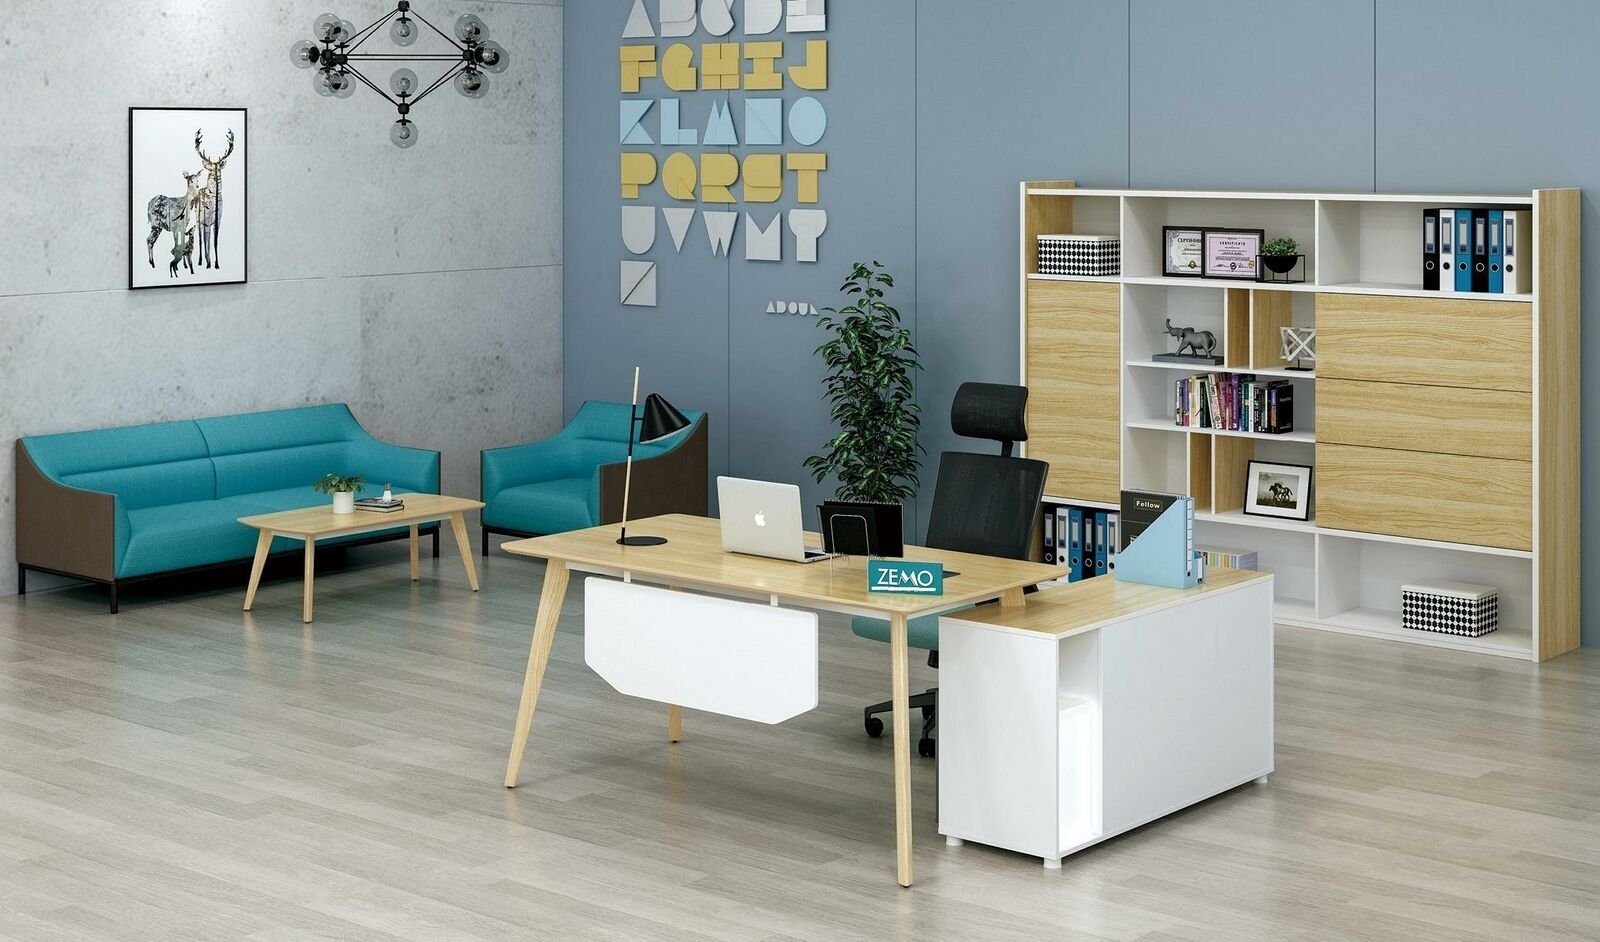 JVmoebel Aktenschrank Home Office Regale Schränke Holz Einrichtung Büromöbel Aktenschränke